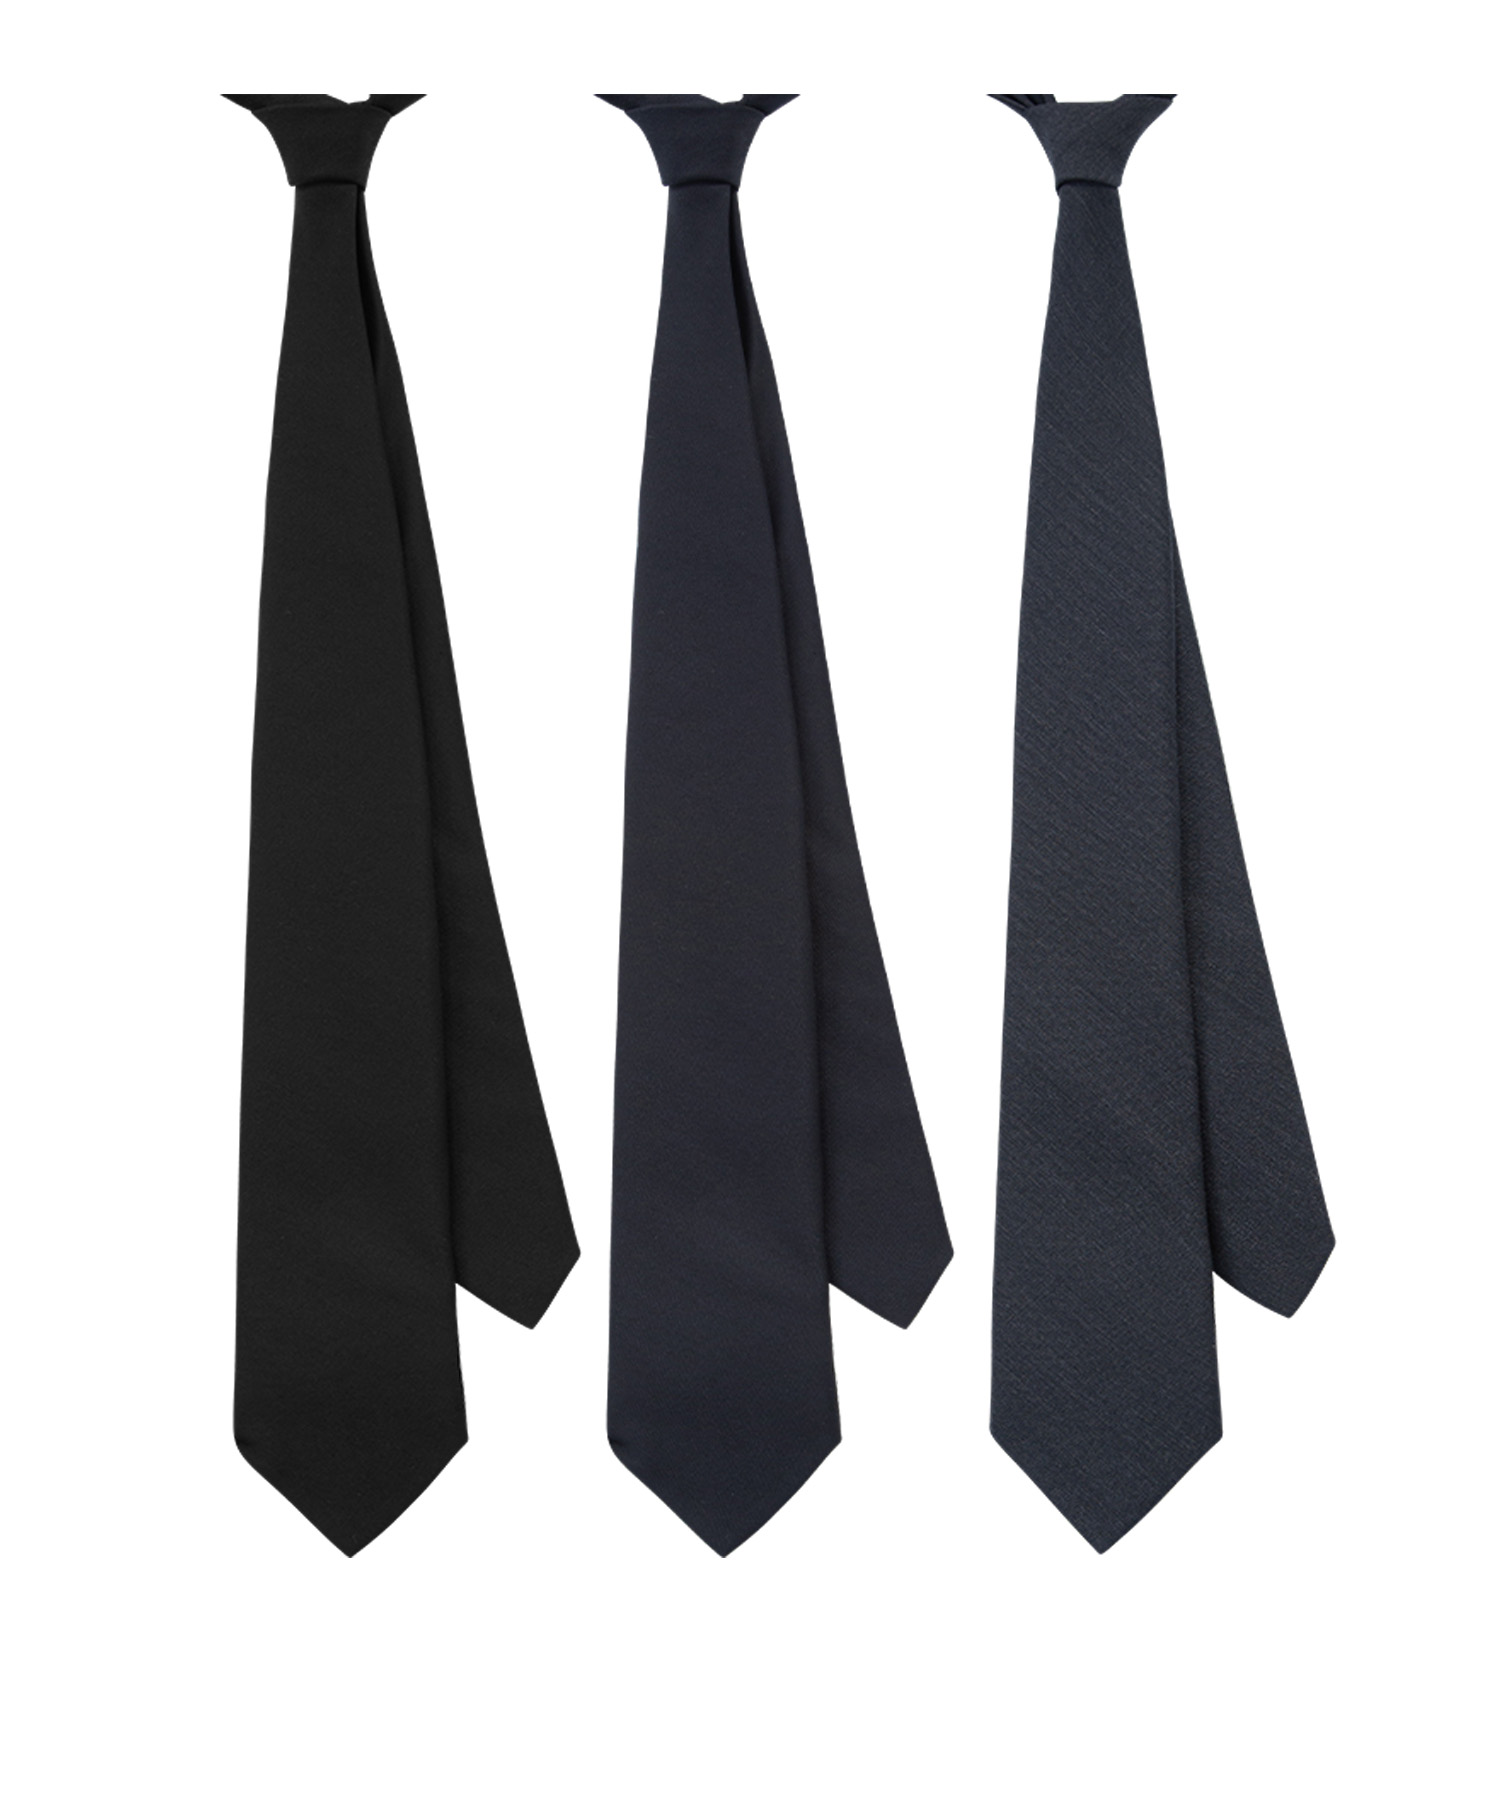 Modern Classic Wool Tie - Black, Navy, Charcoal